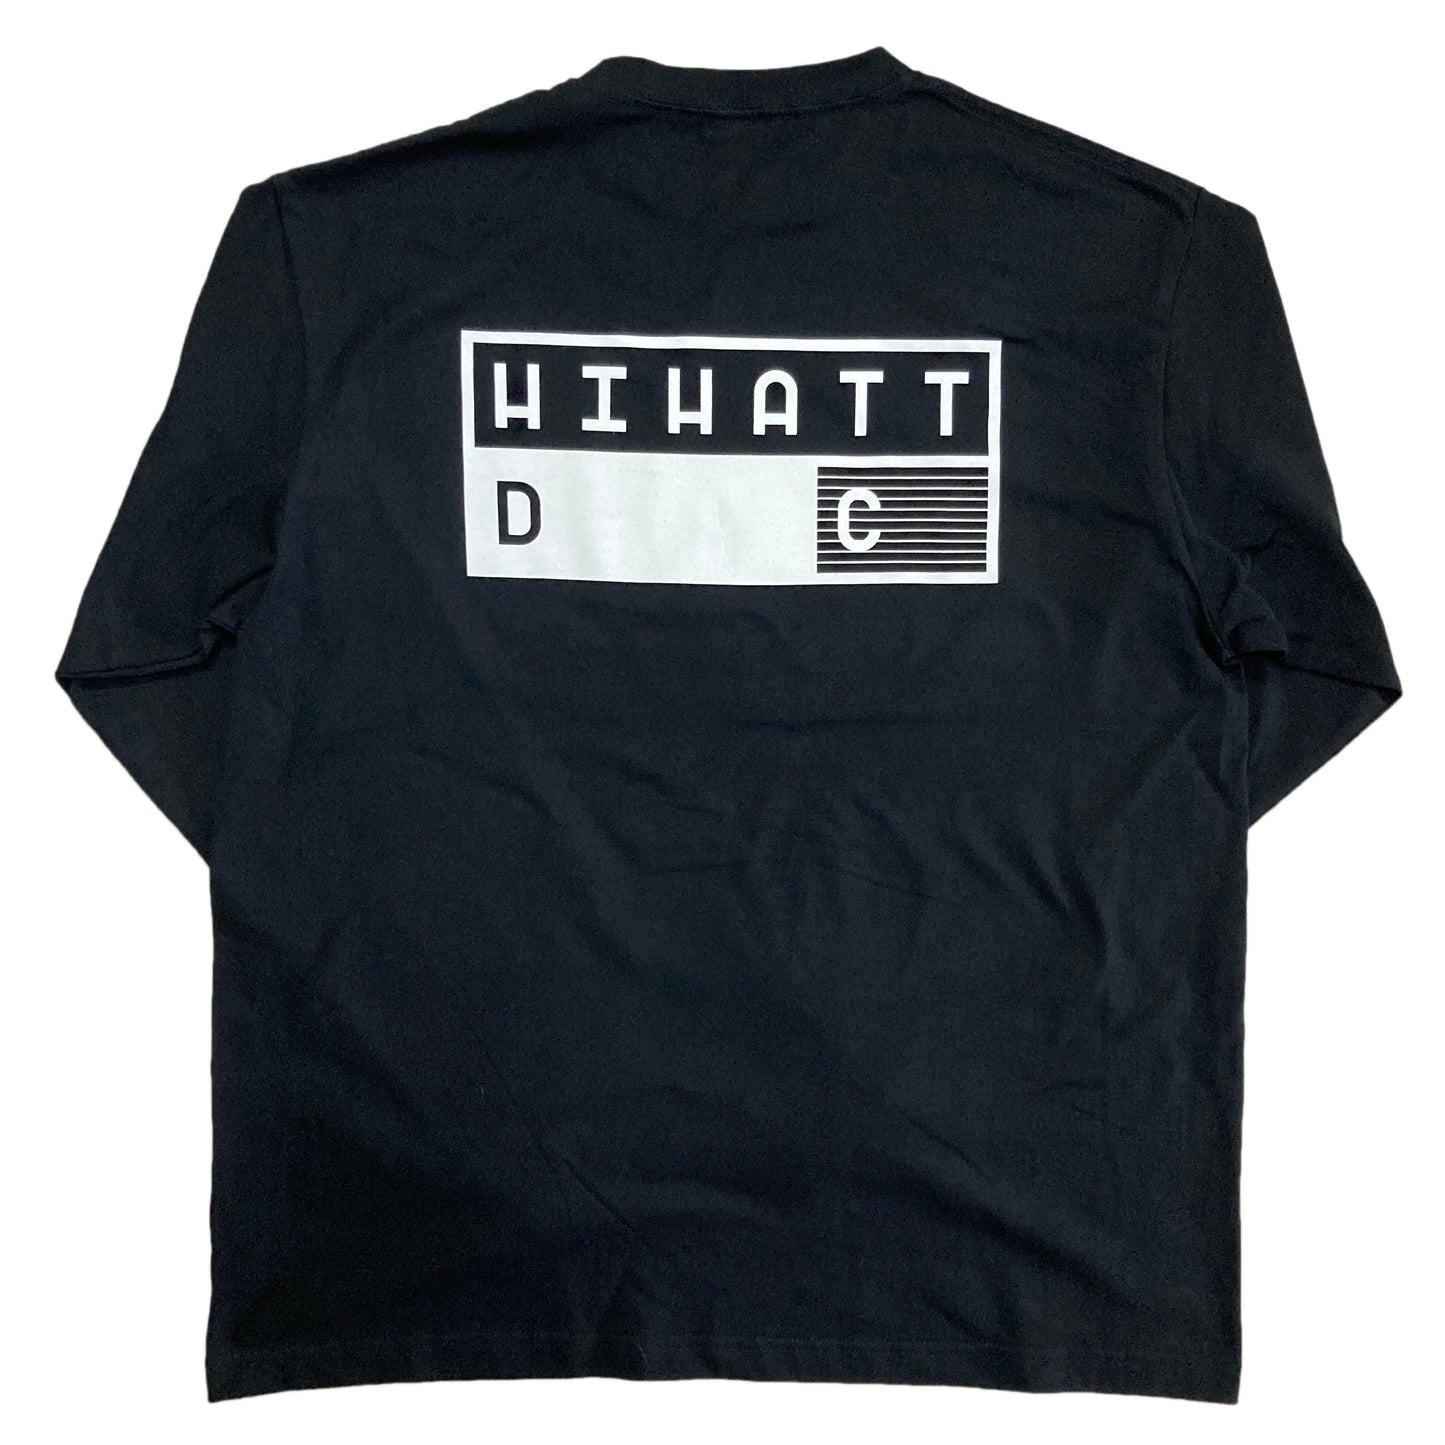 LONG SLEEVE T-SHIRT(BLACK) / HIHATT DC New logo